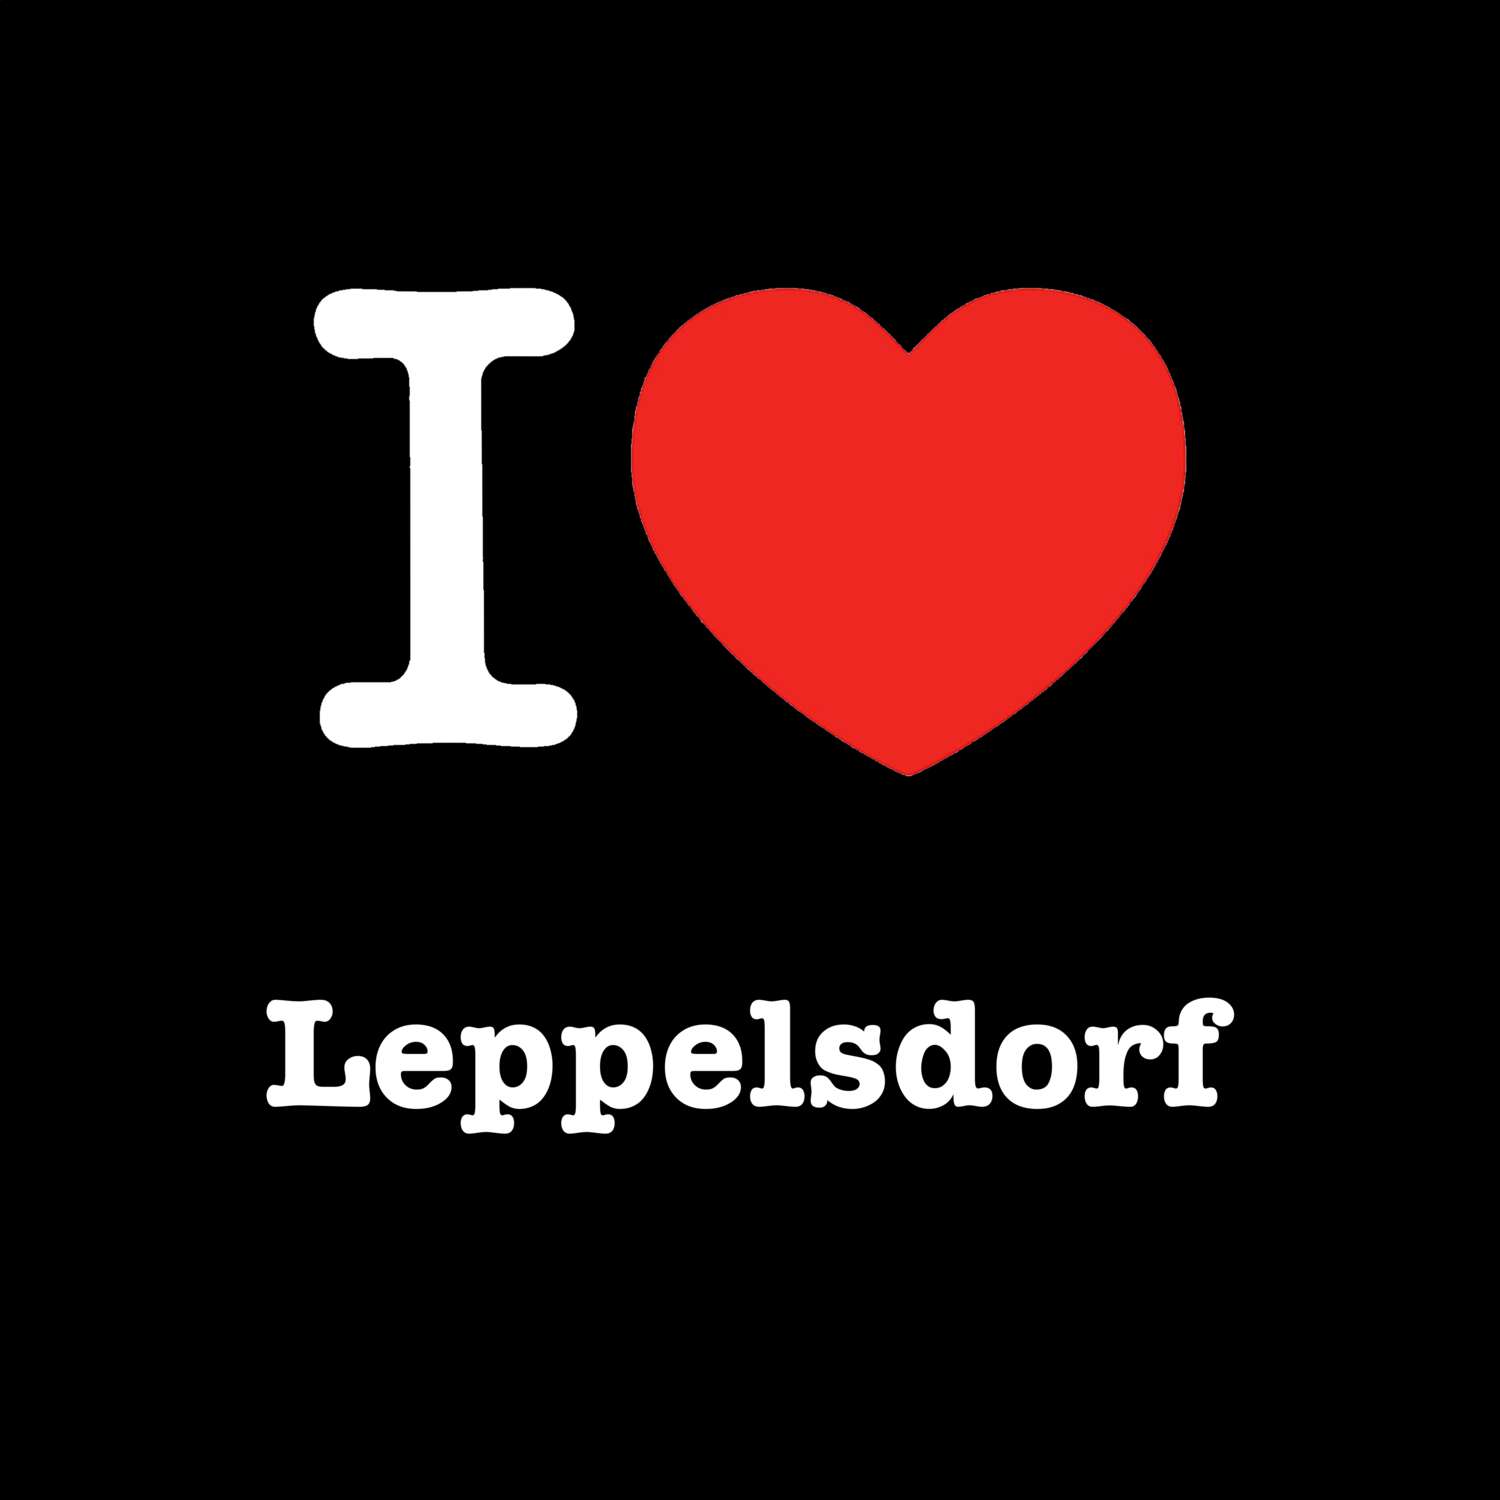 Leppelsdorf T-Shirt »I love«